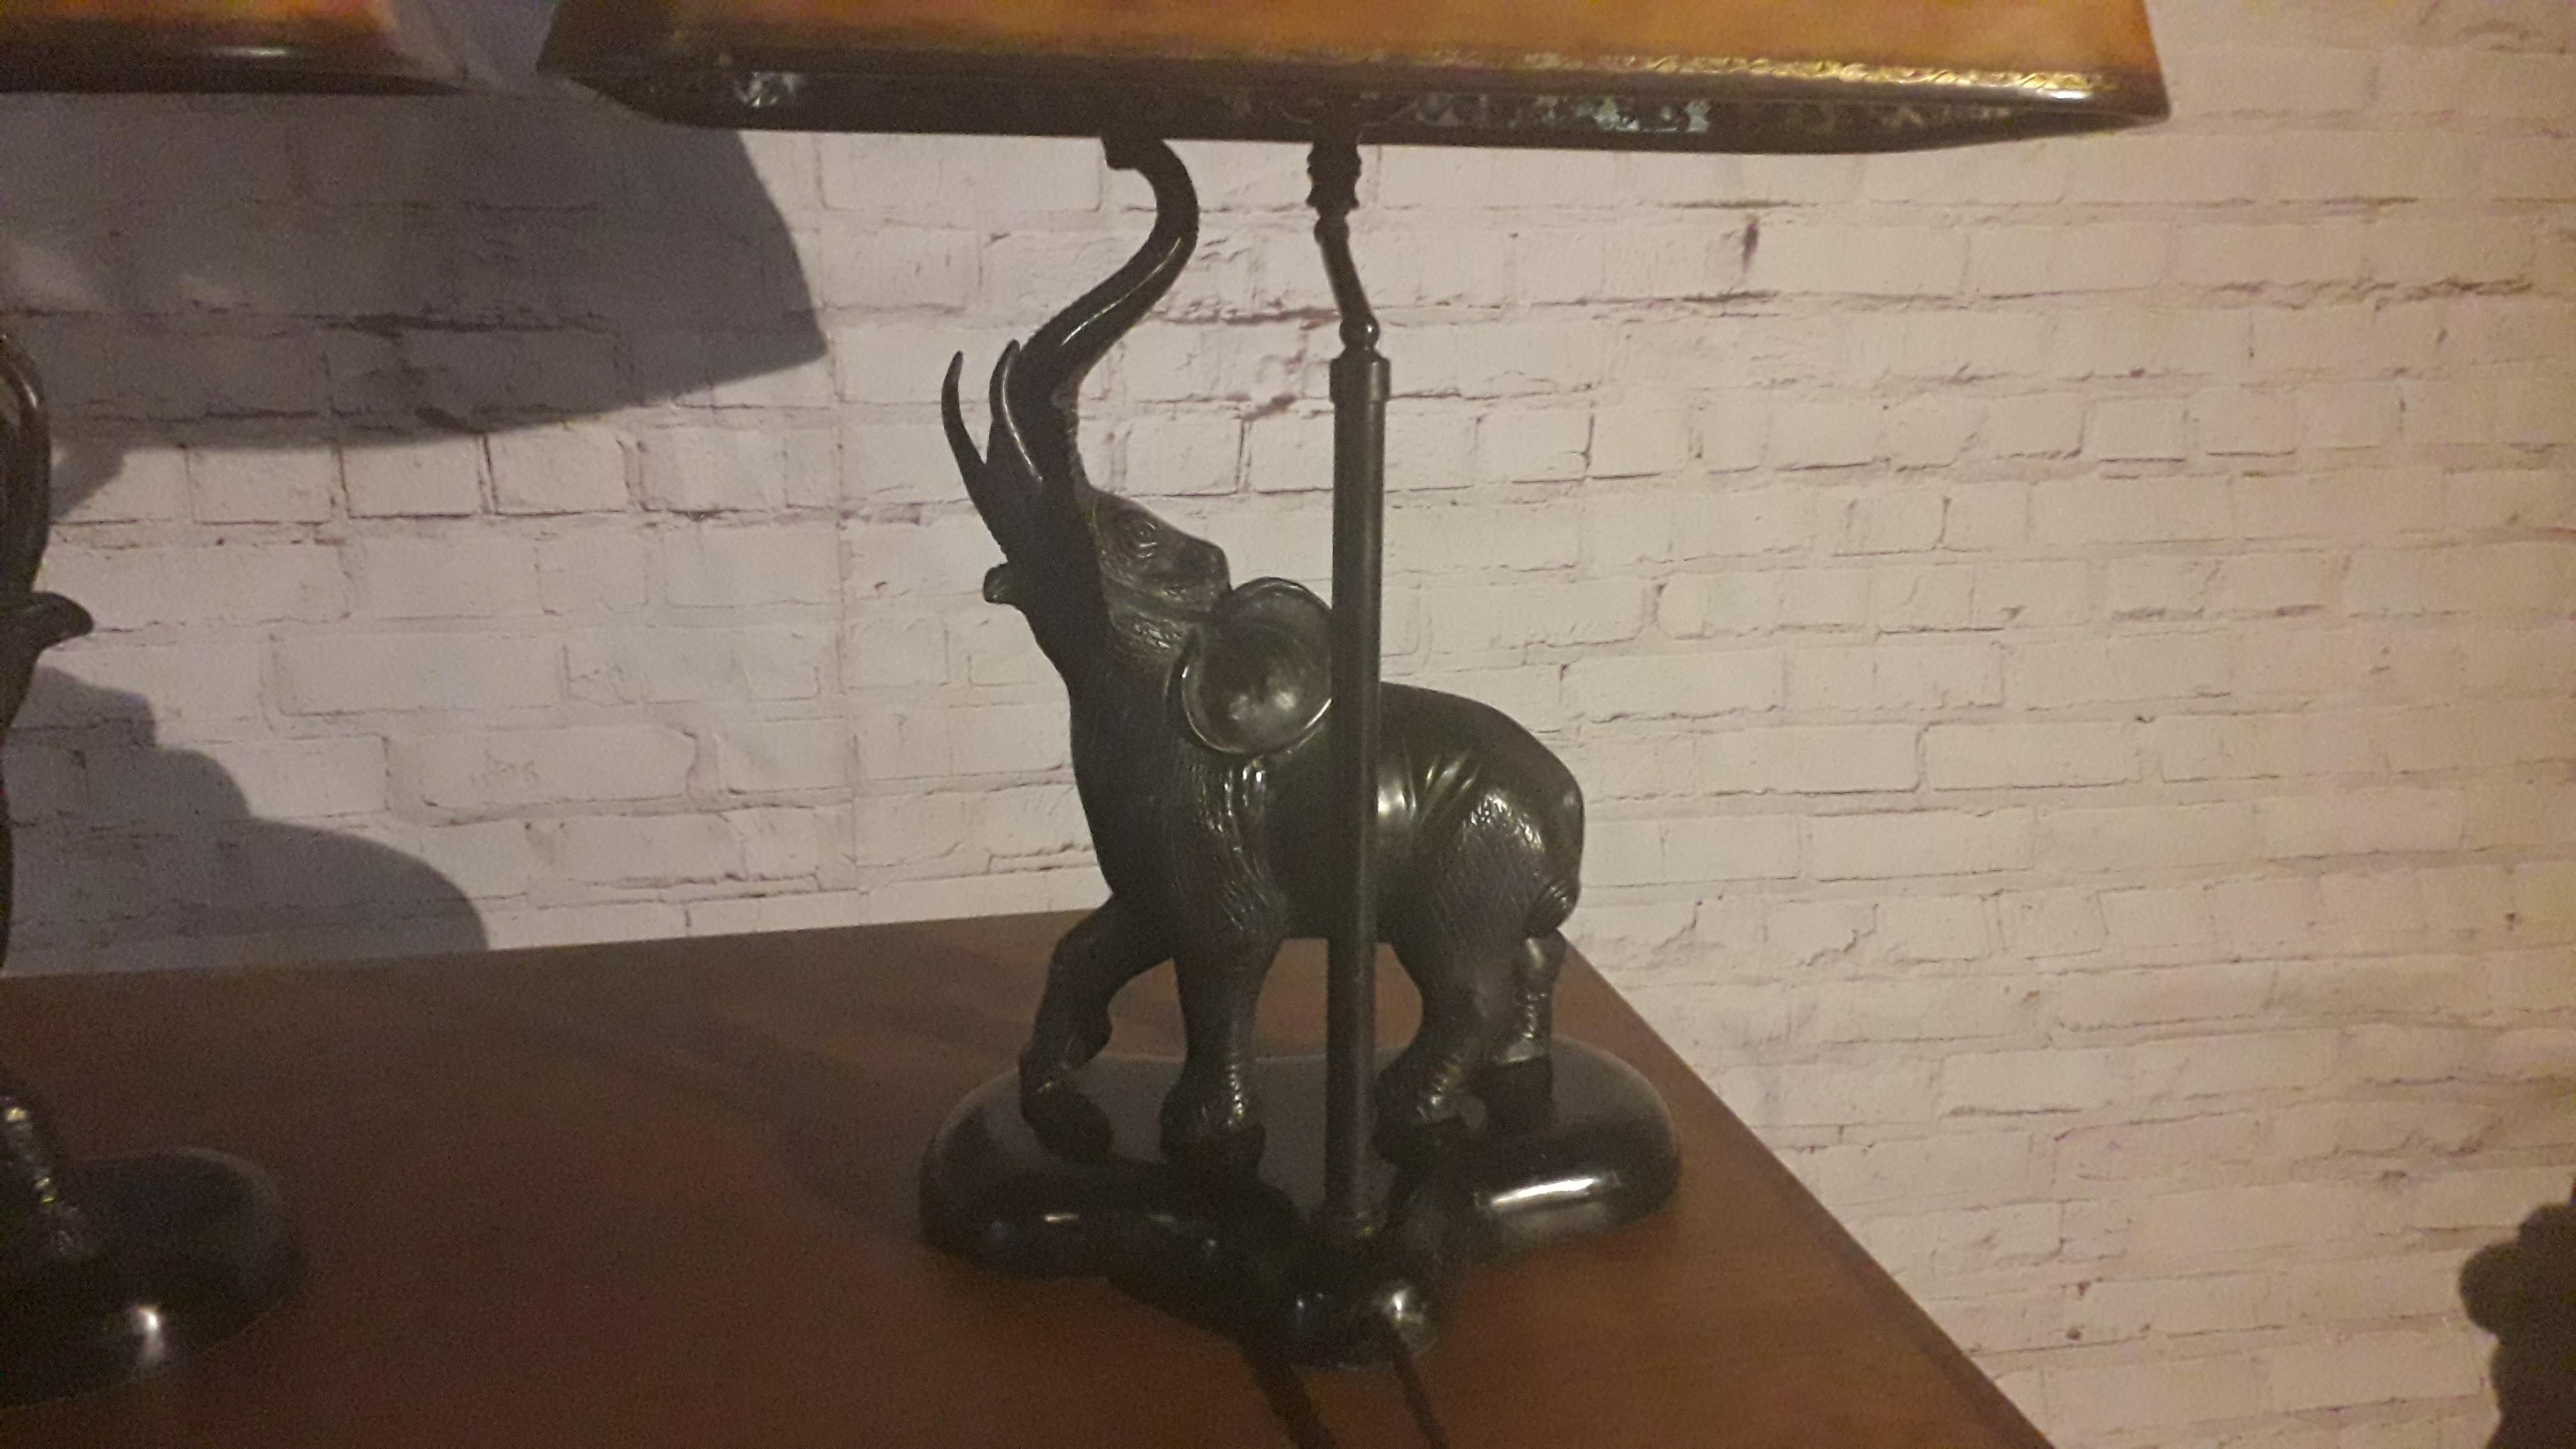 maitland smith bronze lamps